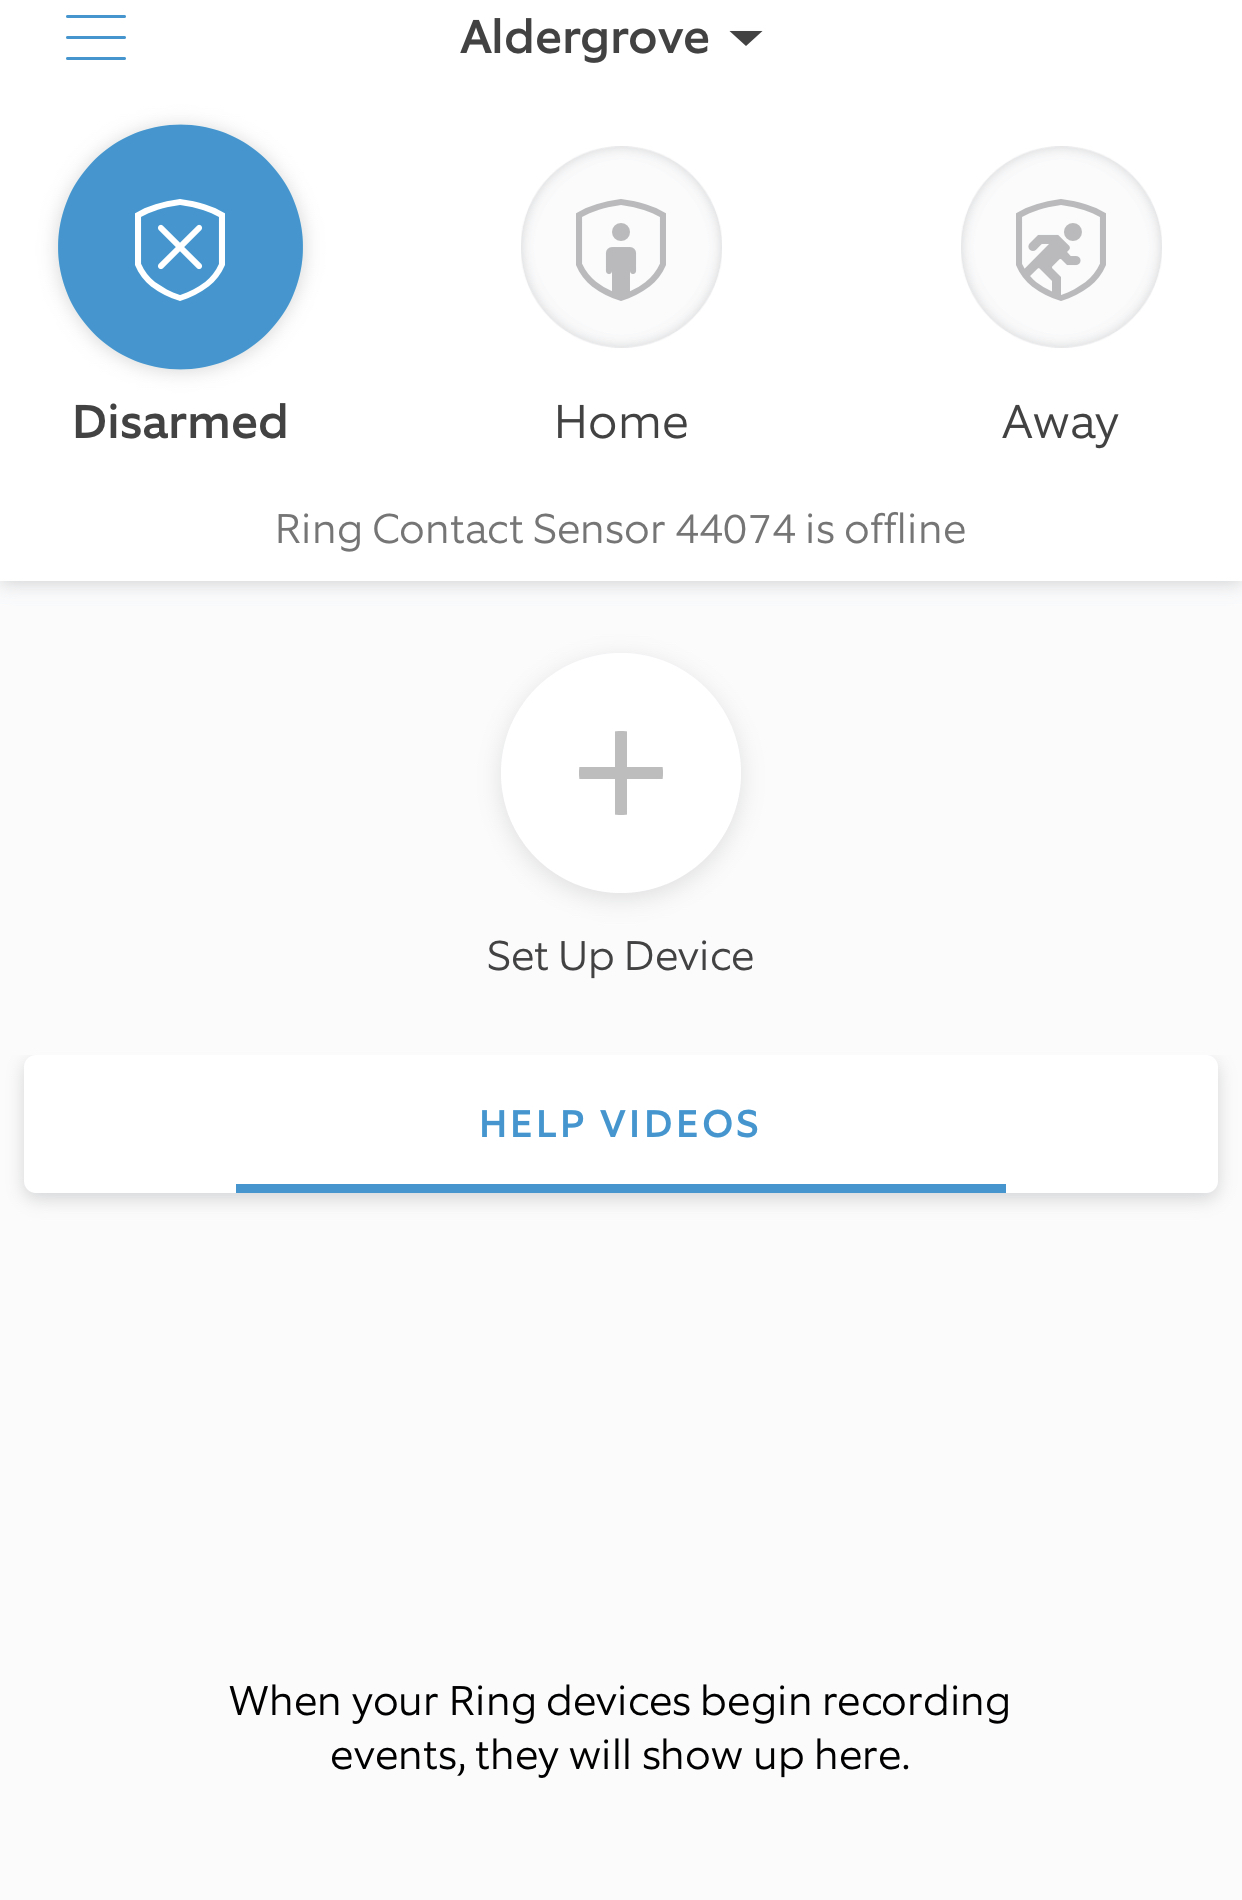 Ring Alarm home screen app